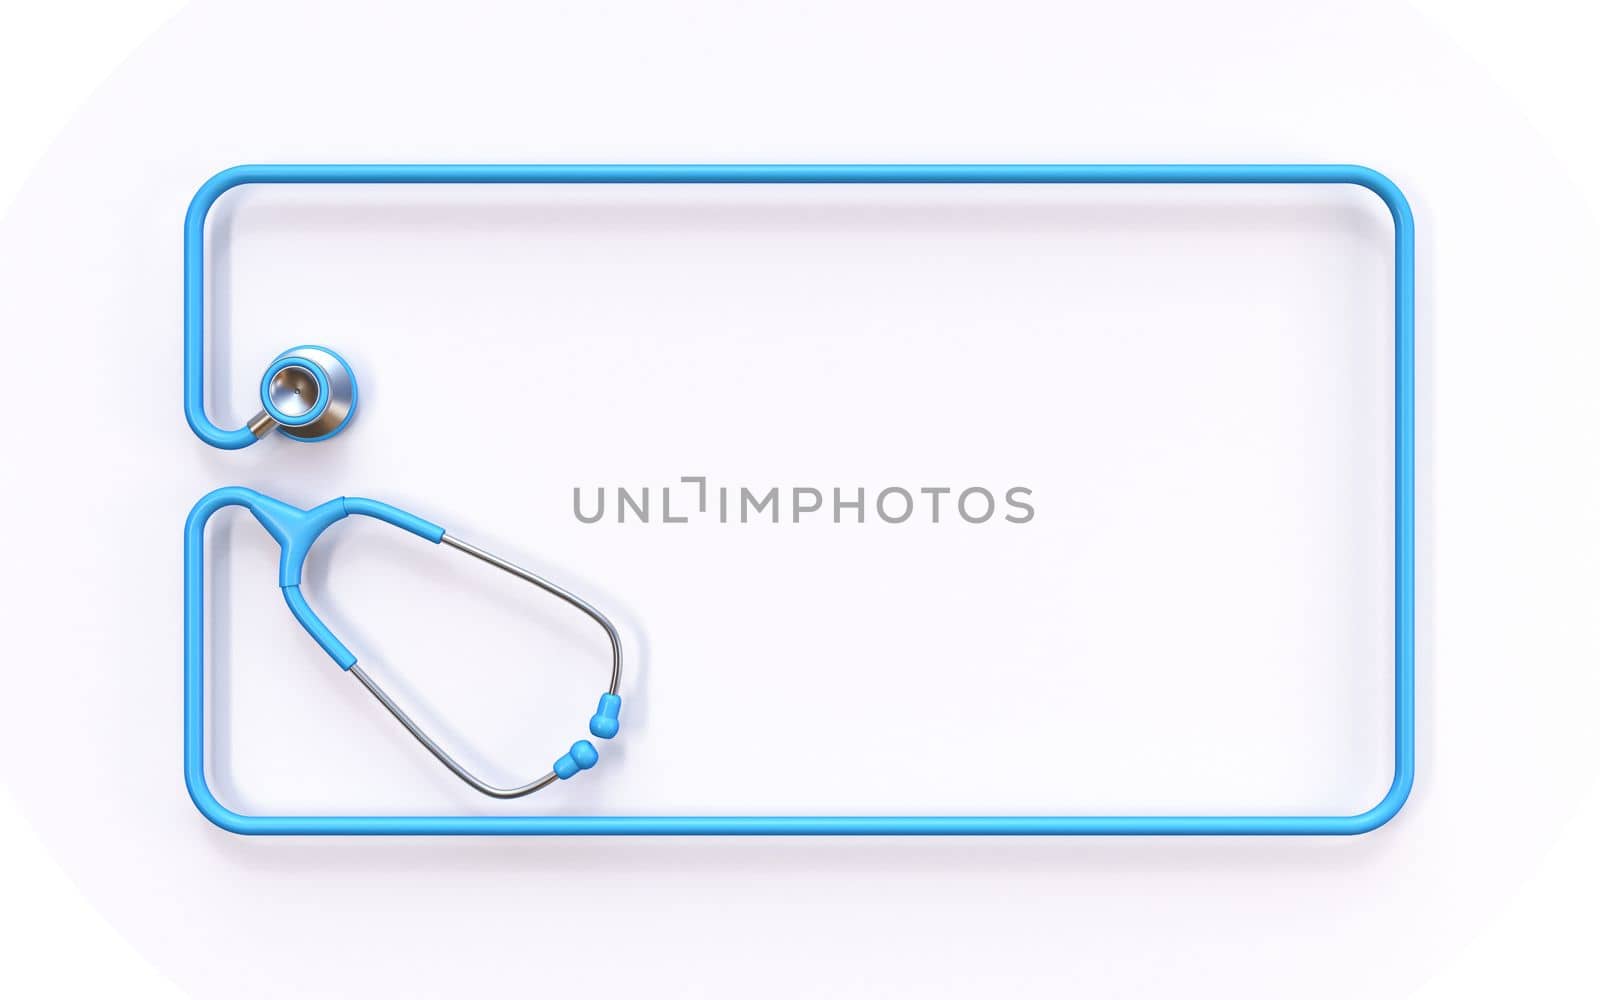 Rectangular horizontal stethoscope frame 3D rendering illustration isolated on white background